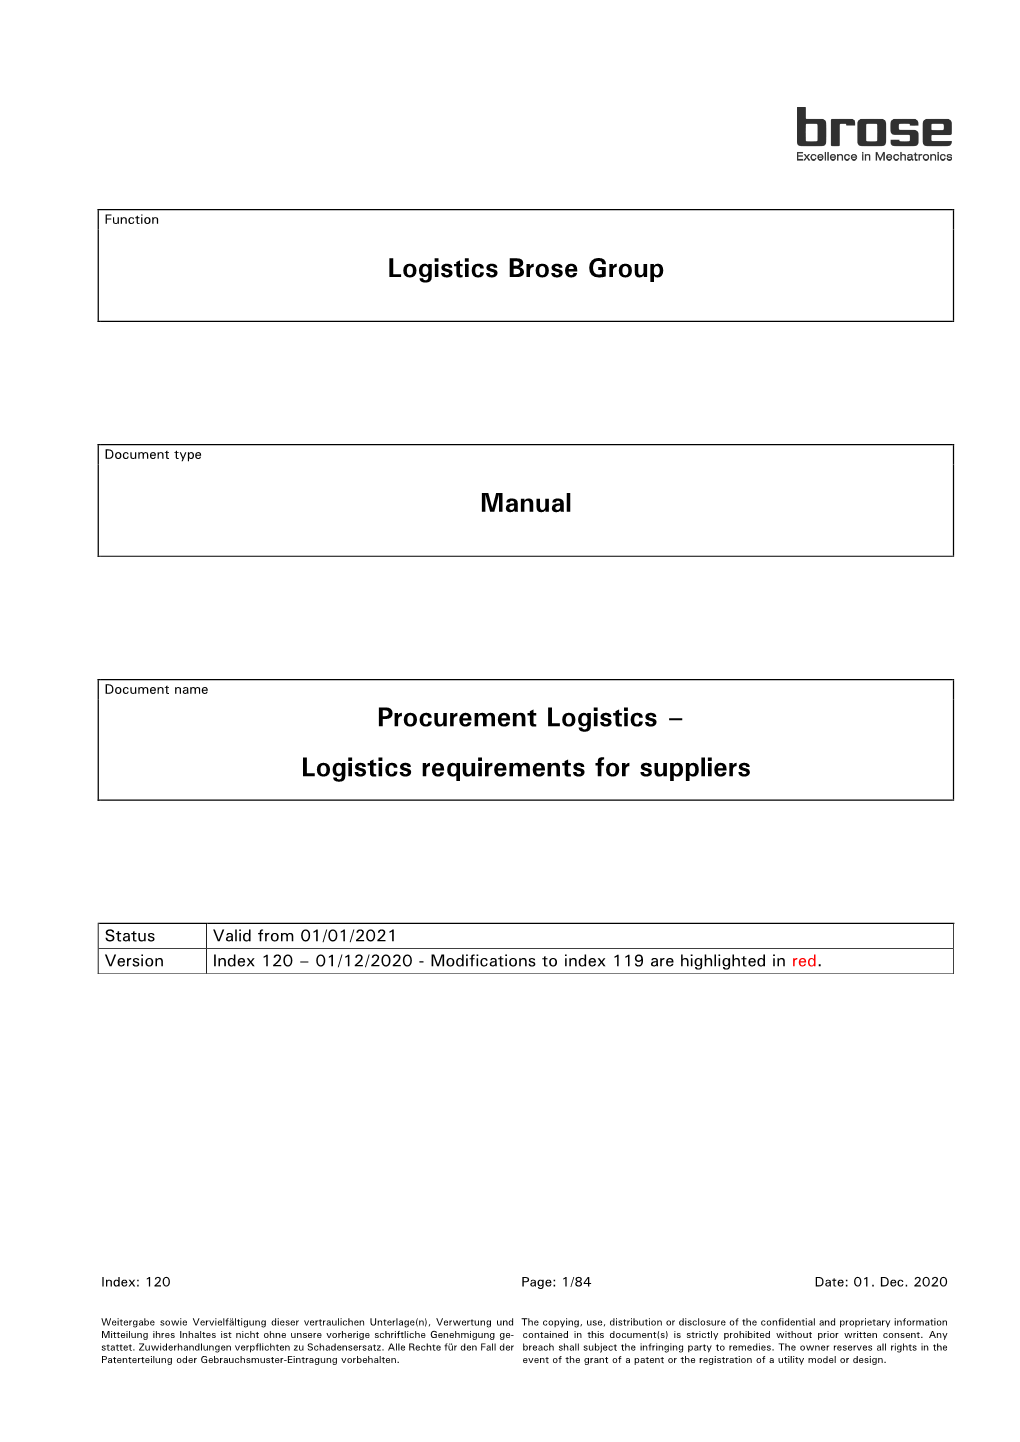 Procurement Logistics, Index 120.Pdf